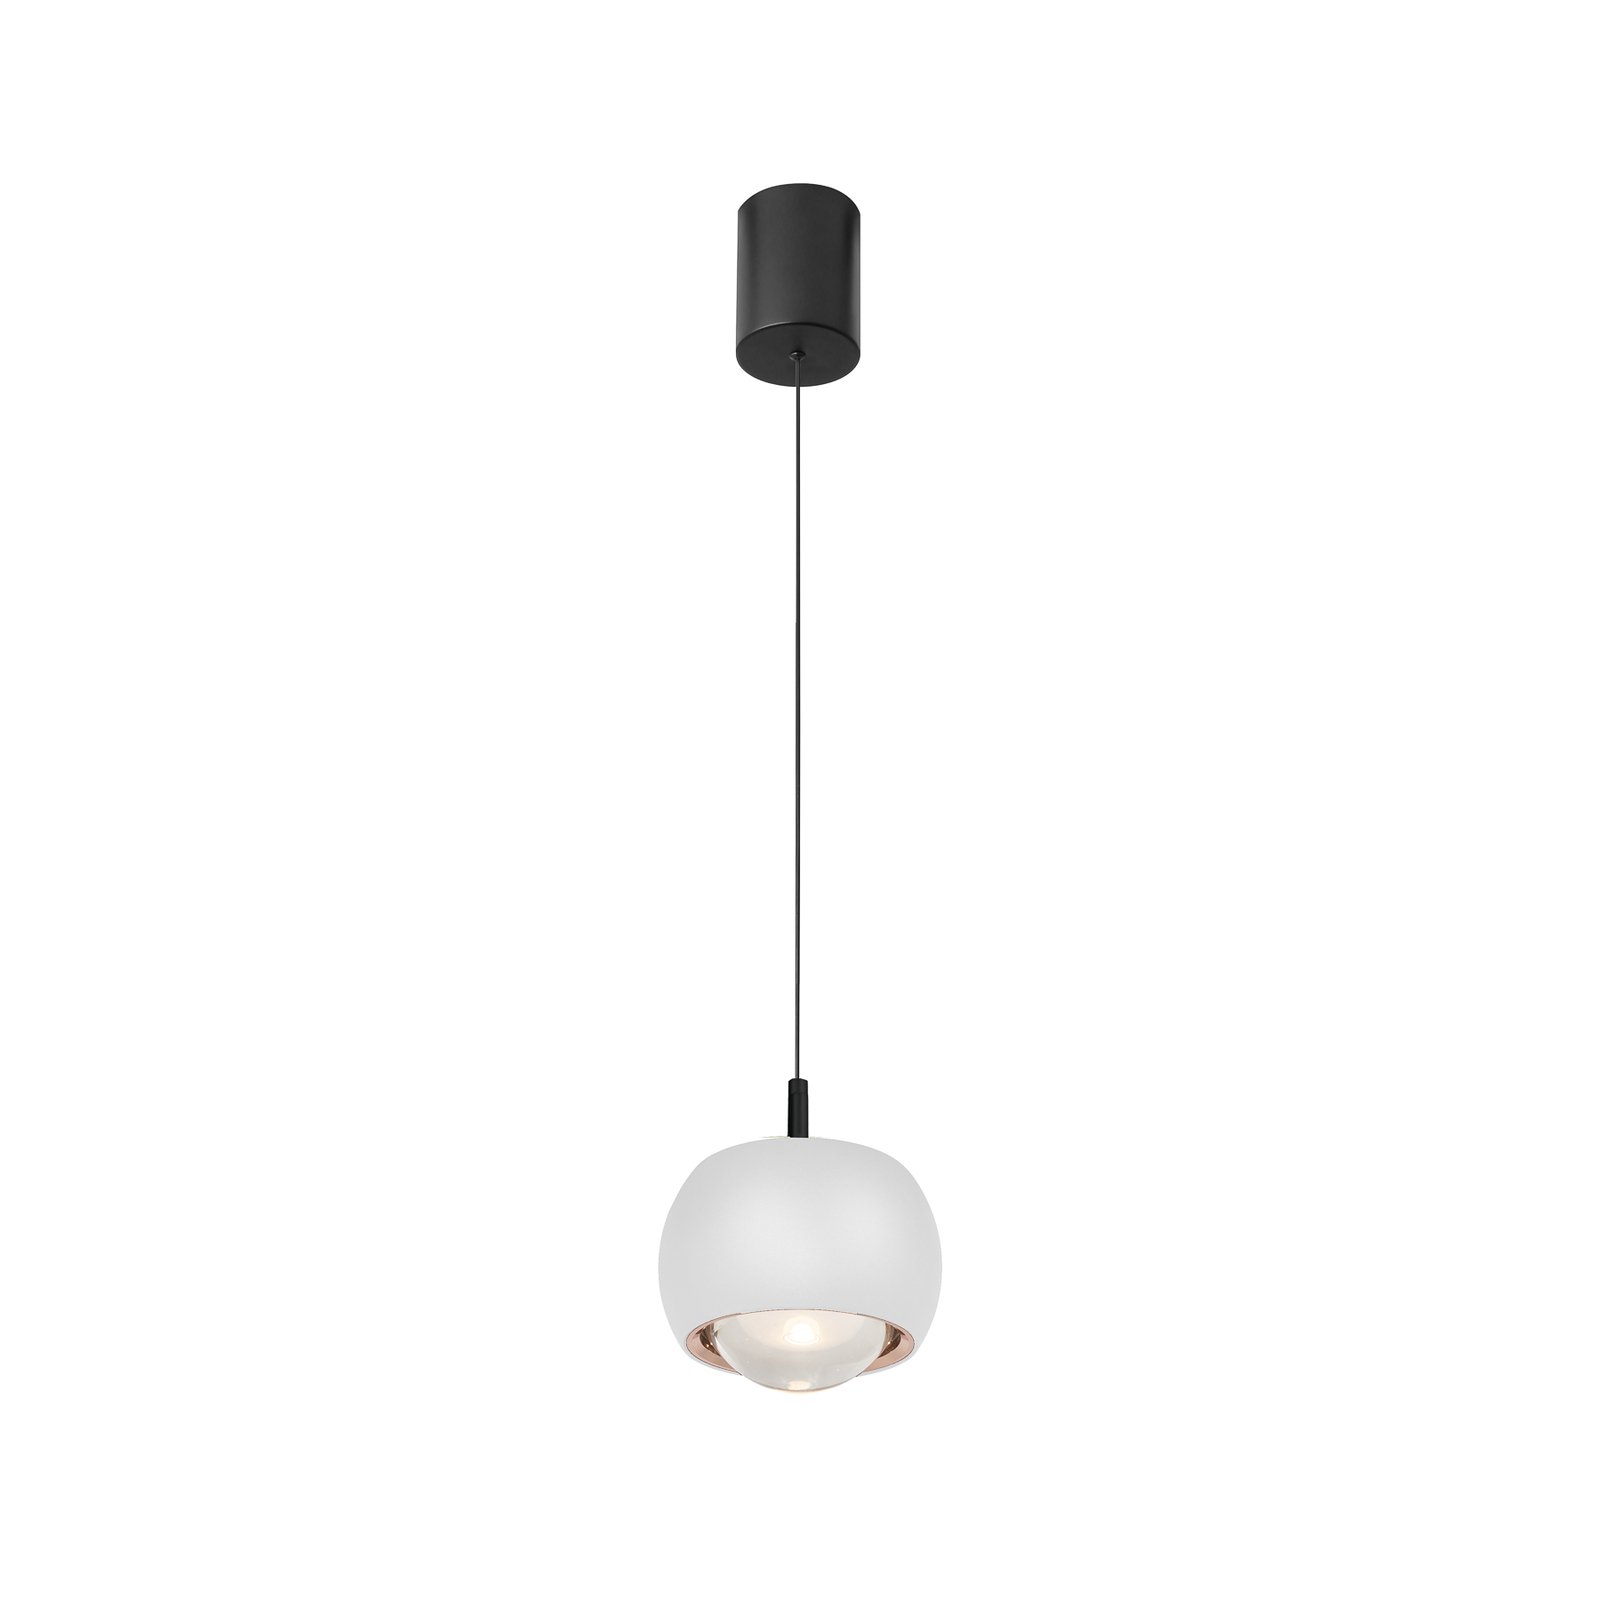 Lampada a sospensione Roller LED, bianca, regolabile in altezza, lente in